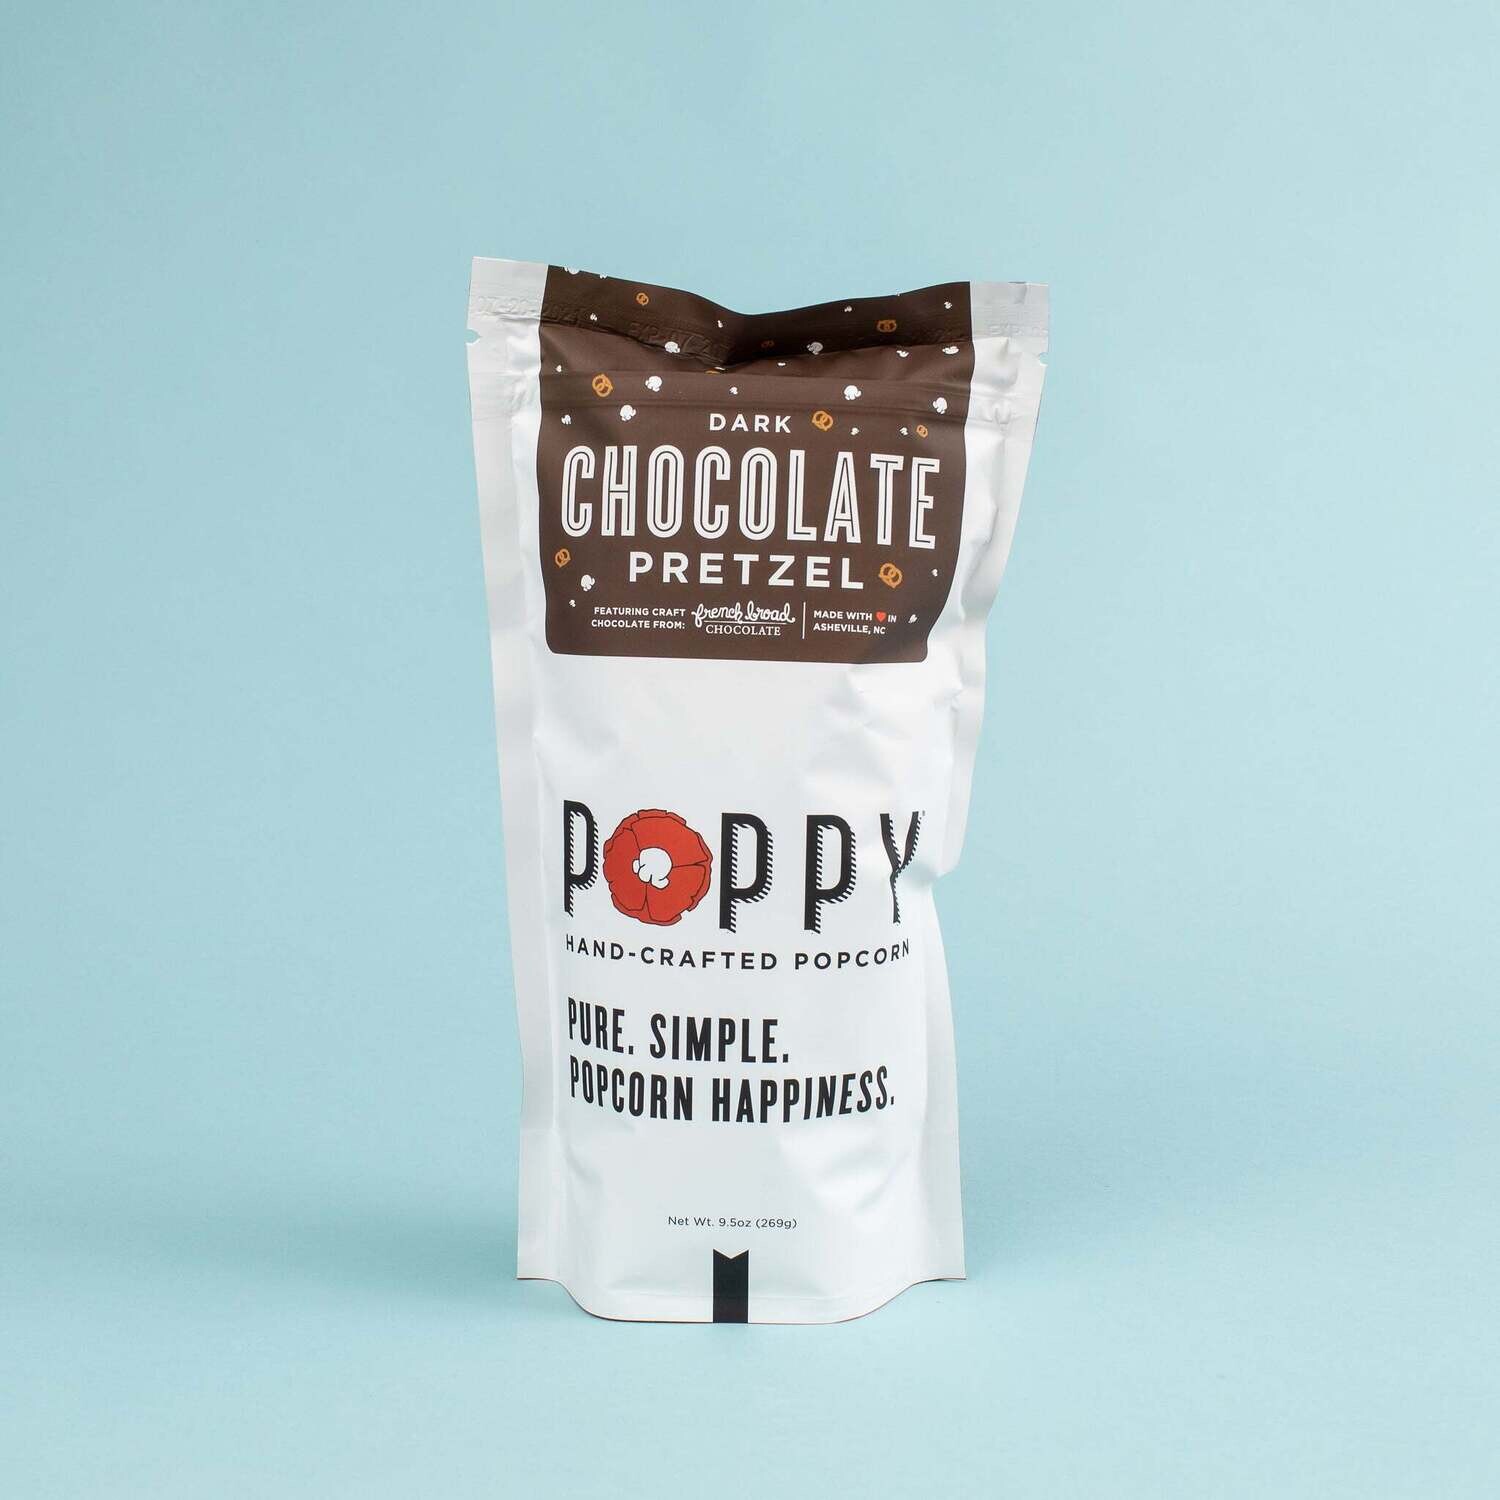 Poppy's Dark Chocolate Pretzel